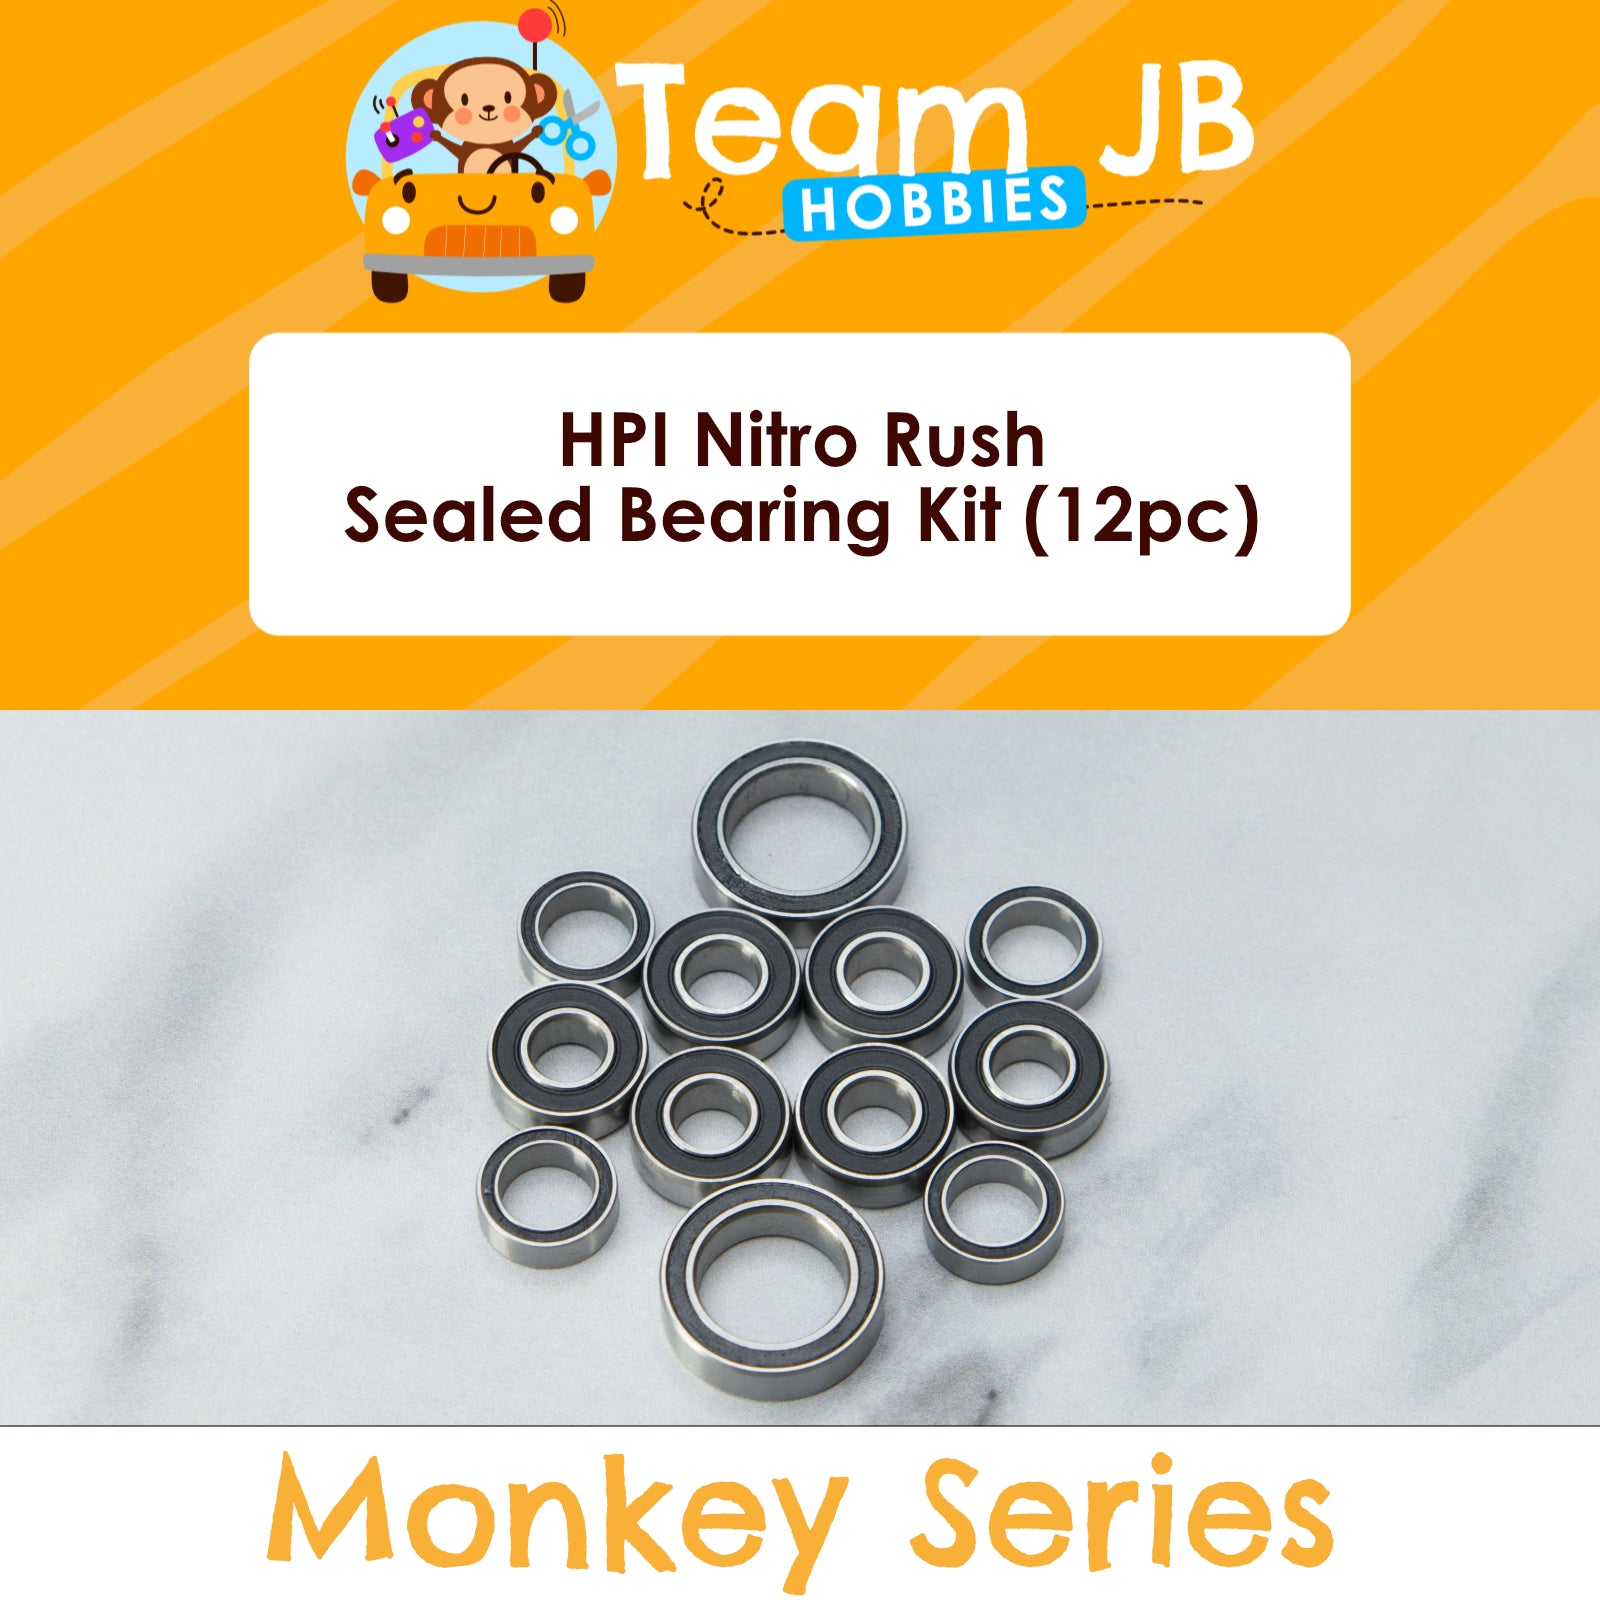 HPI Nitro Rush - Sealed Bearing Kit